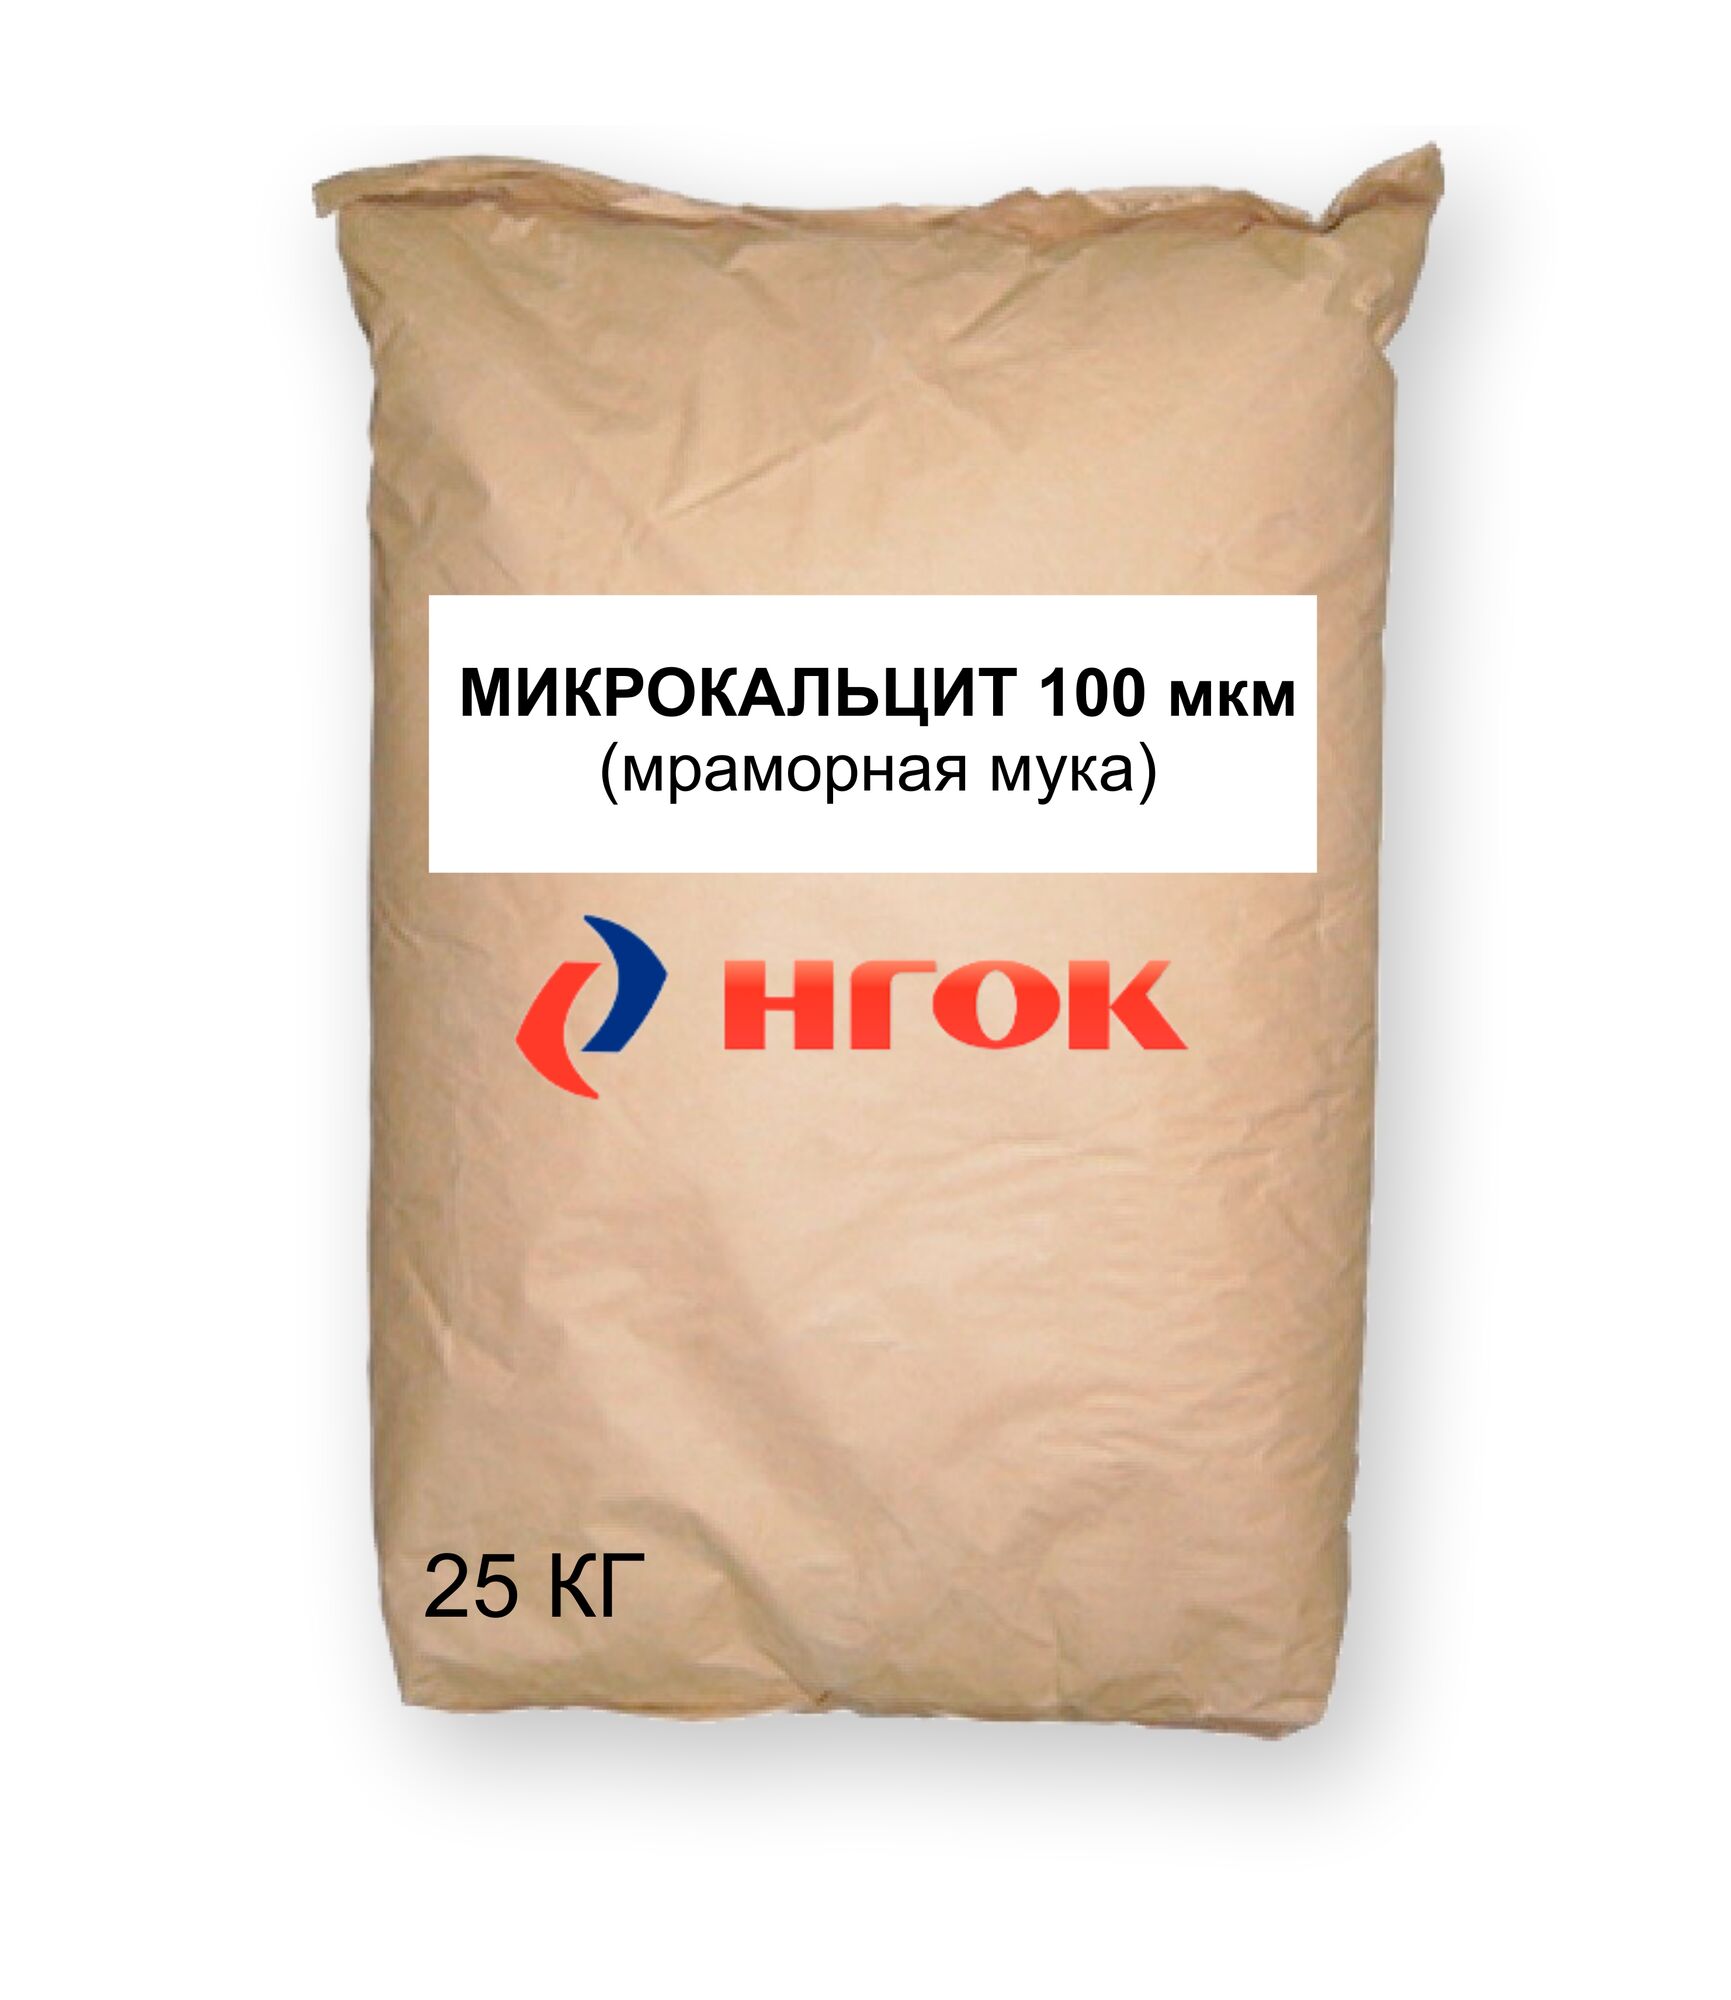 Мраморная мука (микрокальцит) 100 мкм, 25 кг